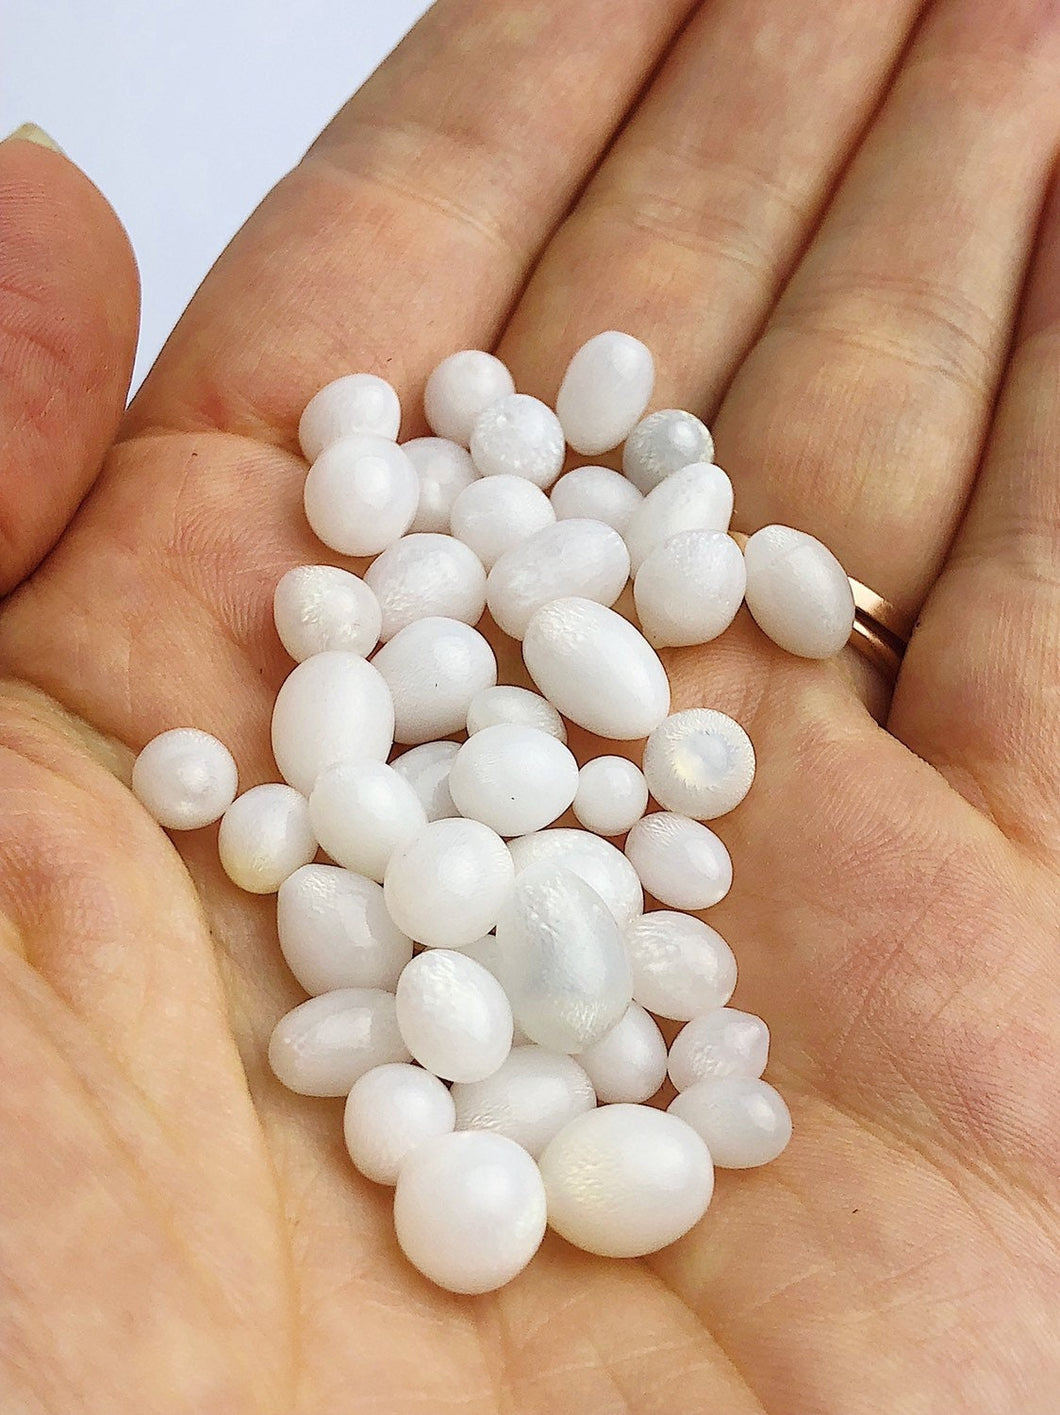 100% All Natural Tridacna Clam Pearls